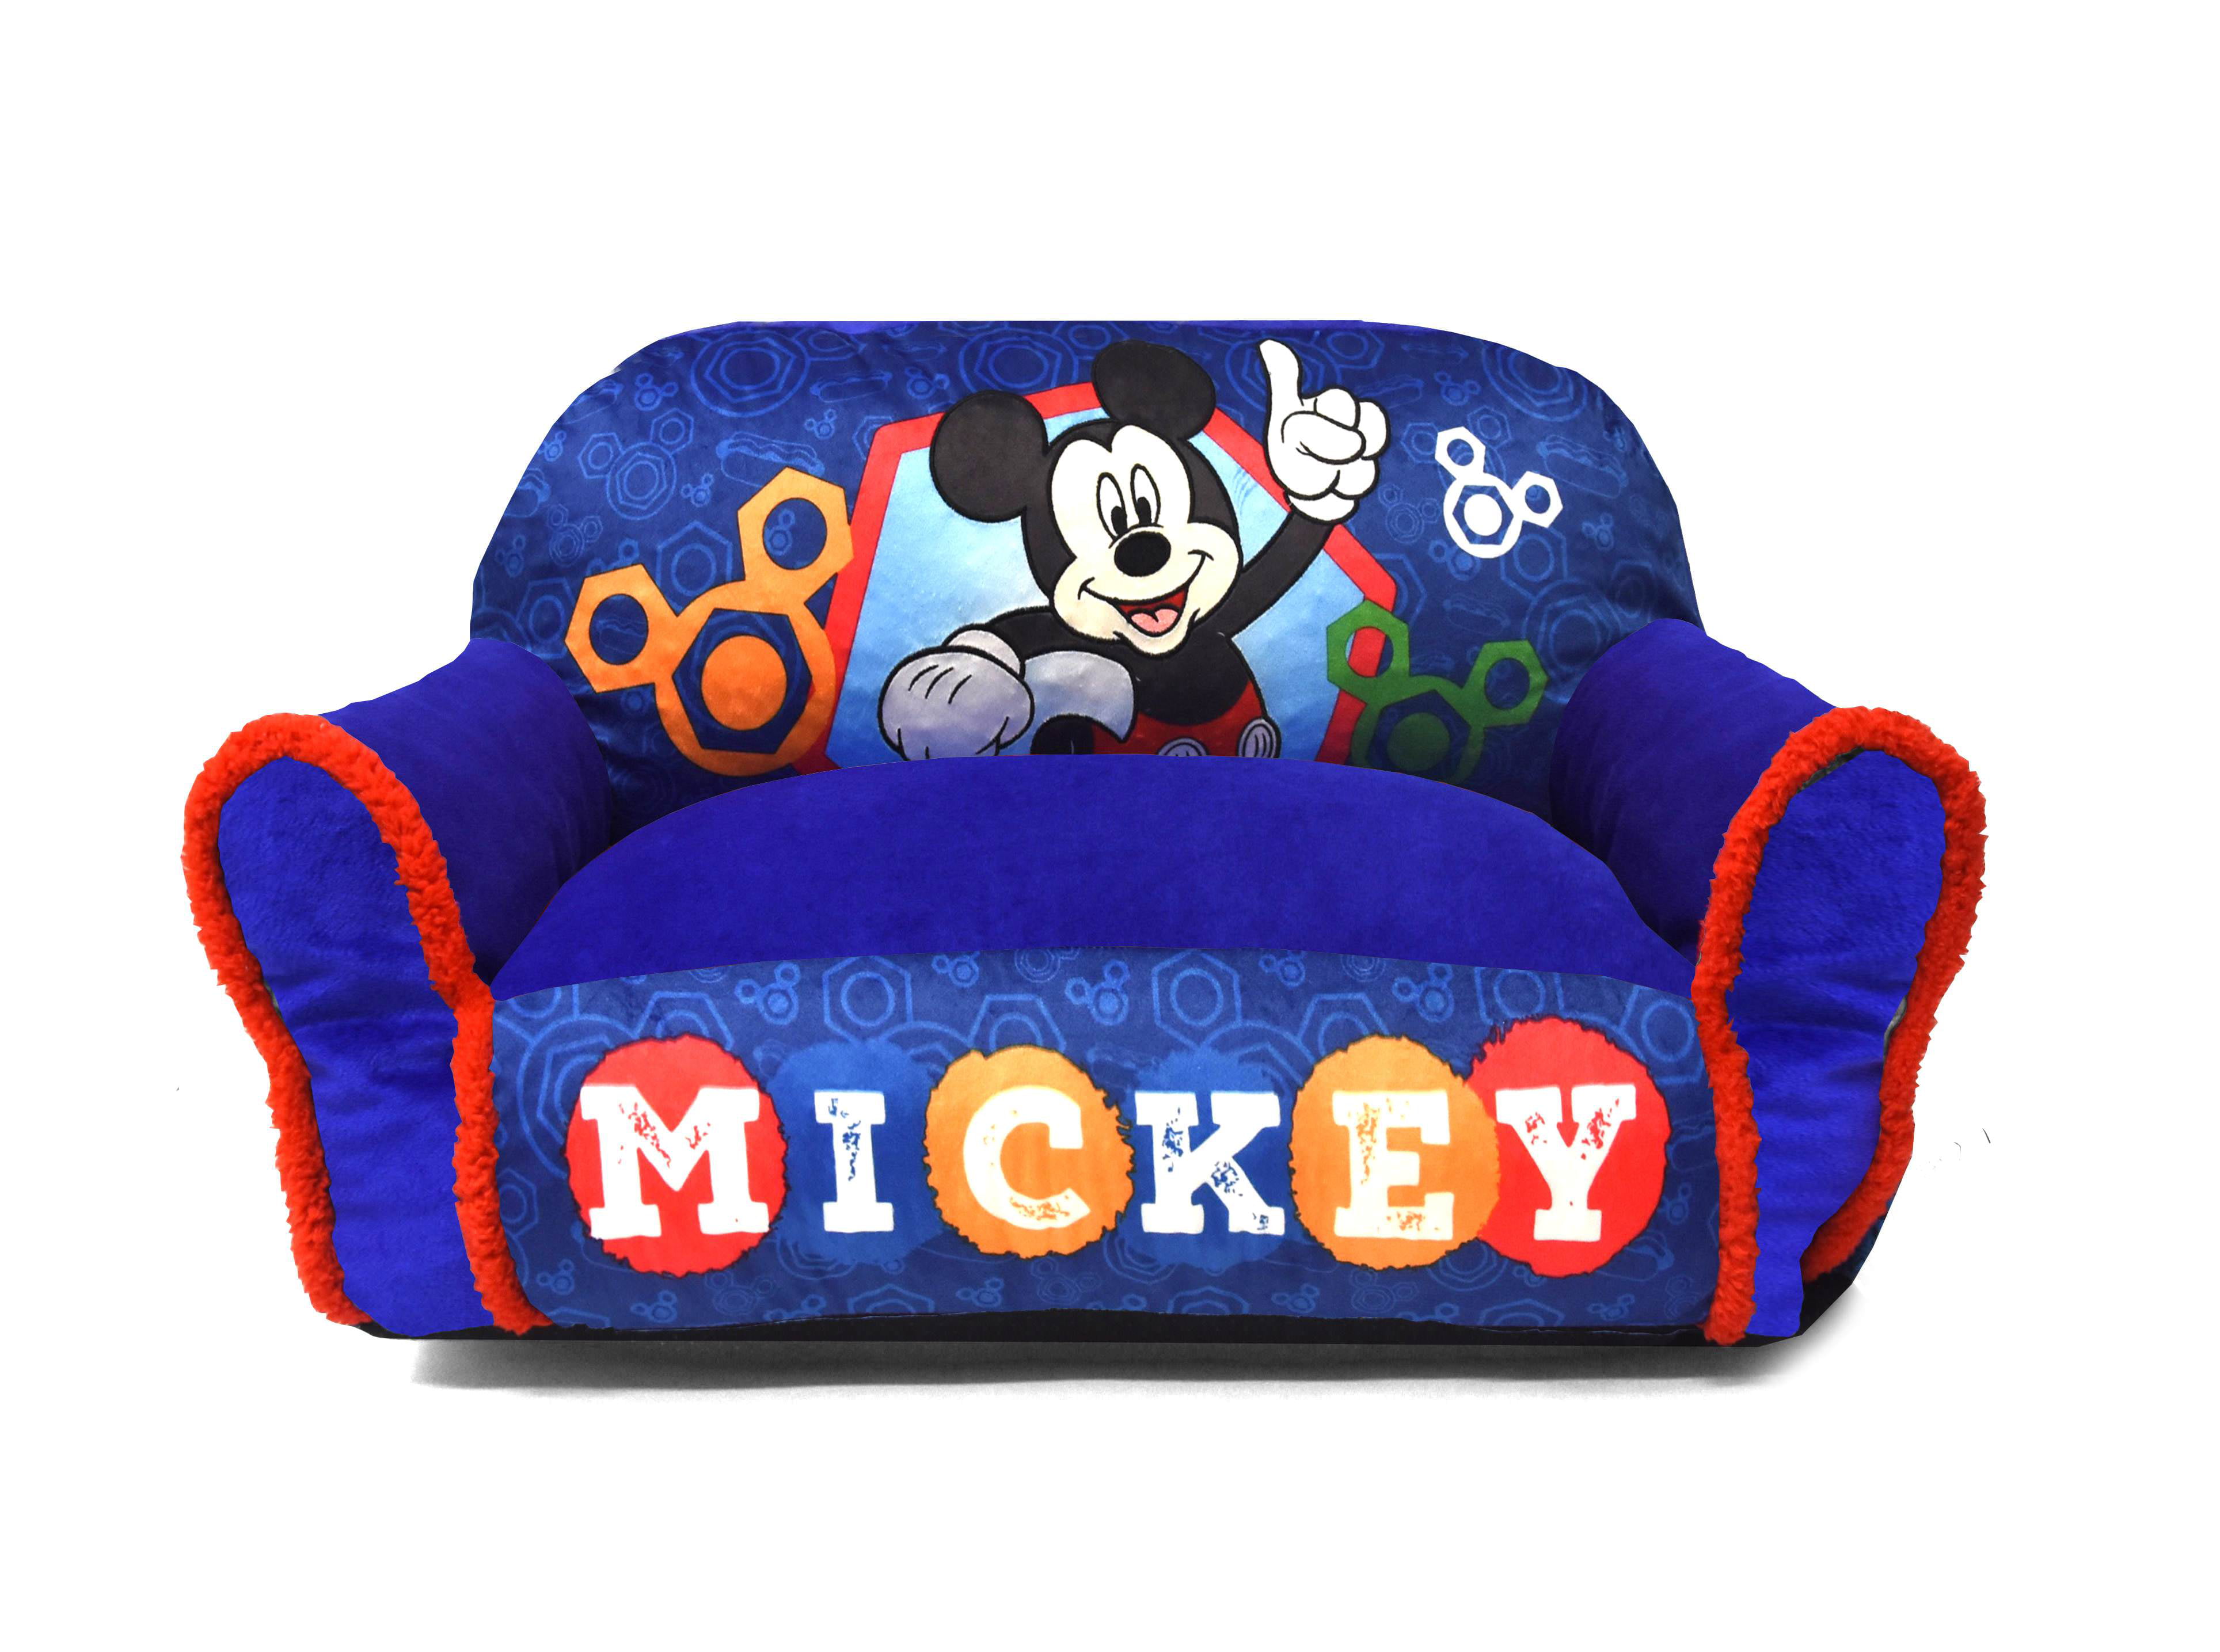 bevestigen Evalueerbaar Aarzelen Disney Mickey Mouse Foam Sofa - Walmart.com